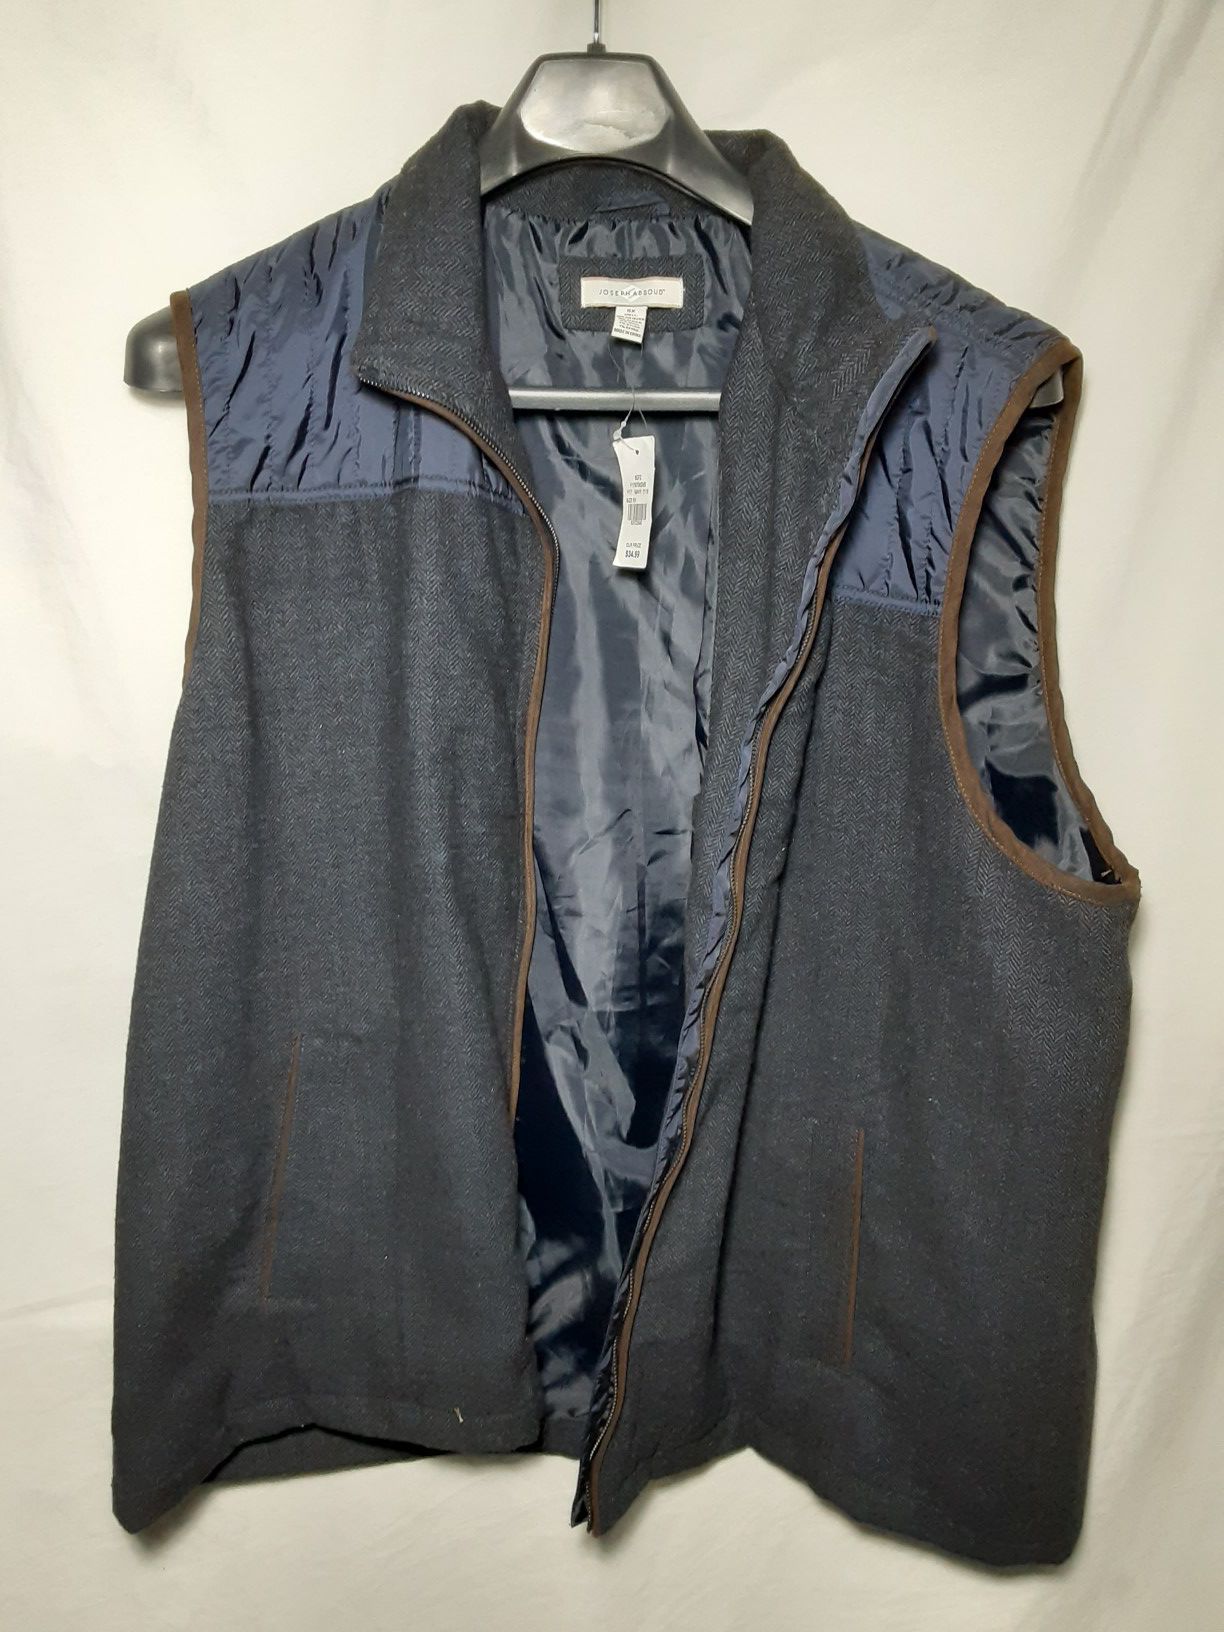 Mens Joseph Abboud Black and Navy Zip Front Vest Size 5X